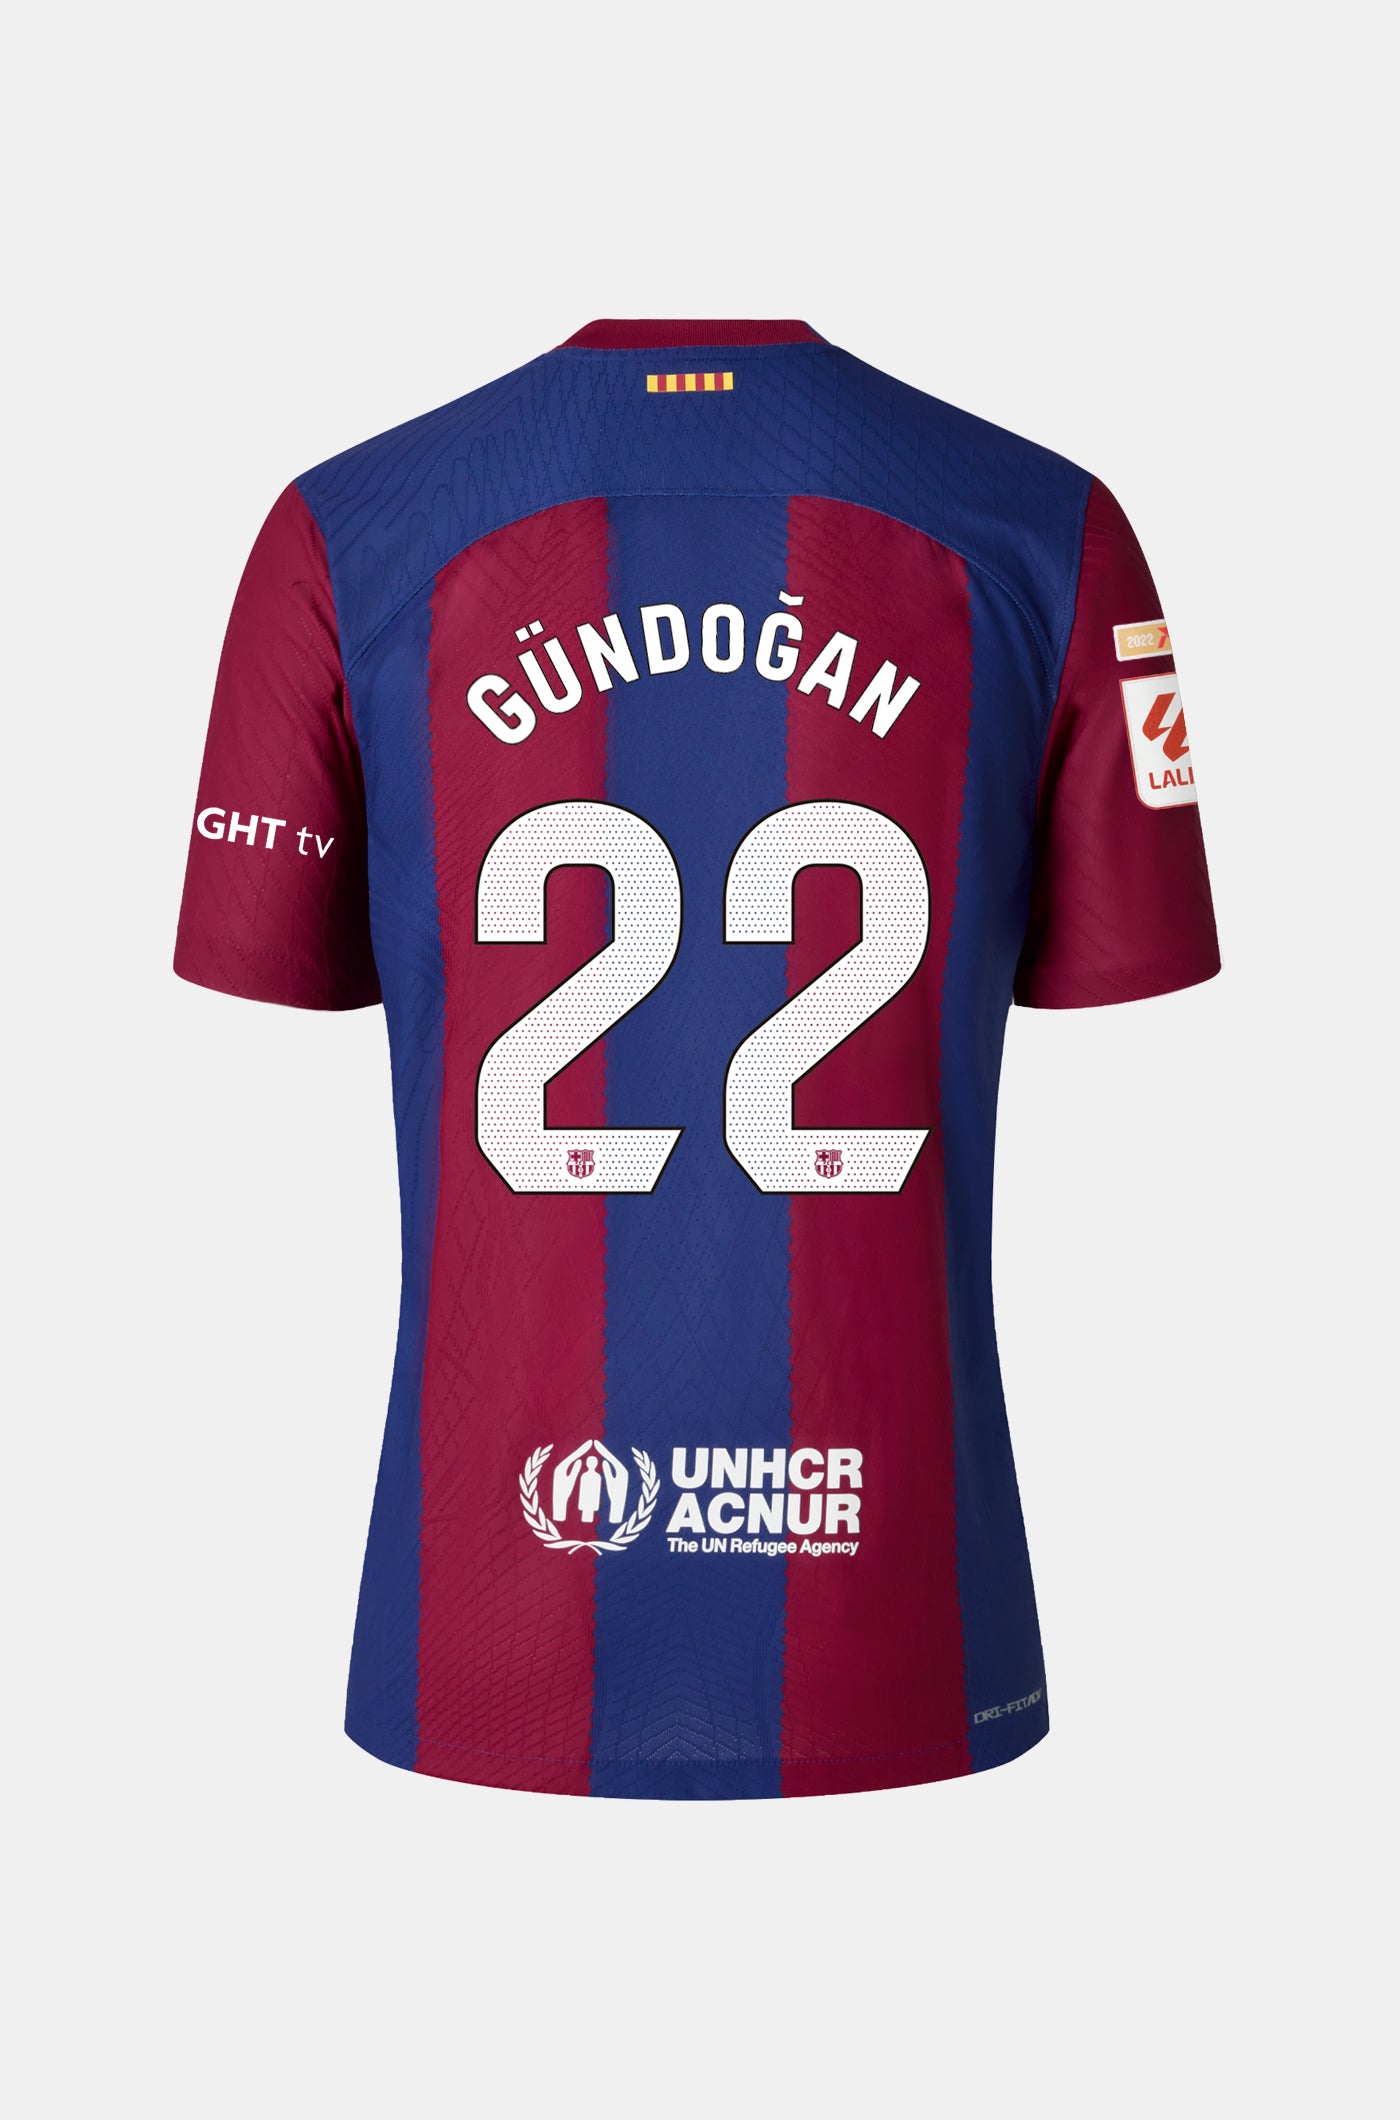 LFP FC Barcelona home shirt 23/24 Player's Edition - GÜNDOĞAN